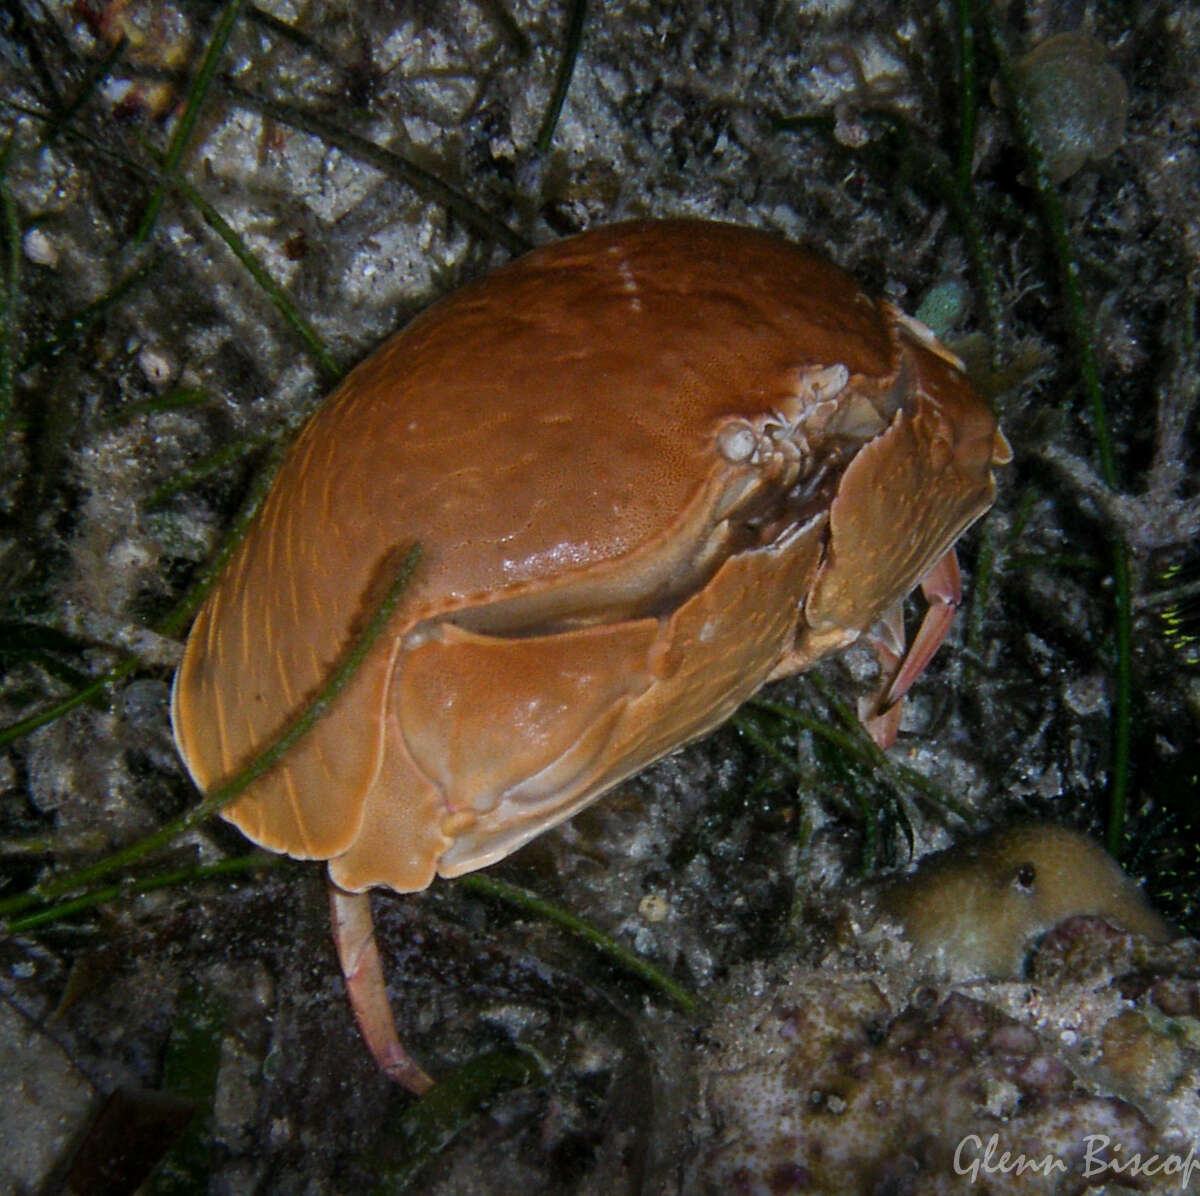 Image of giant box crab